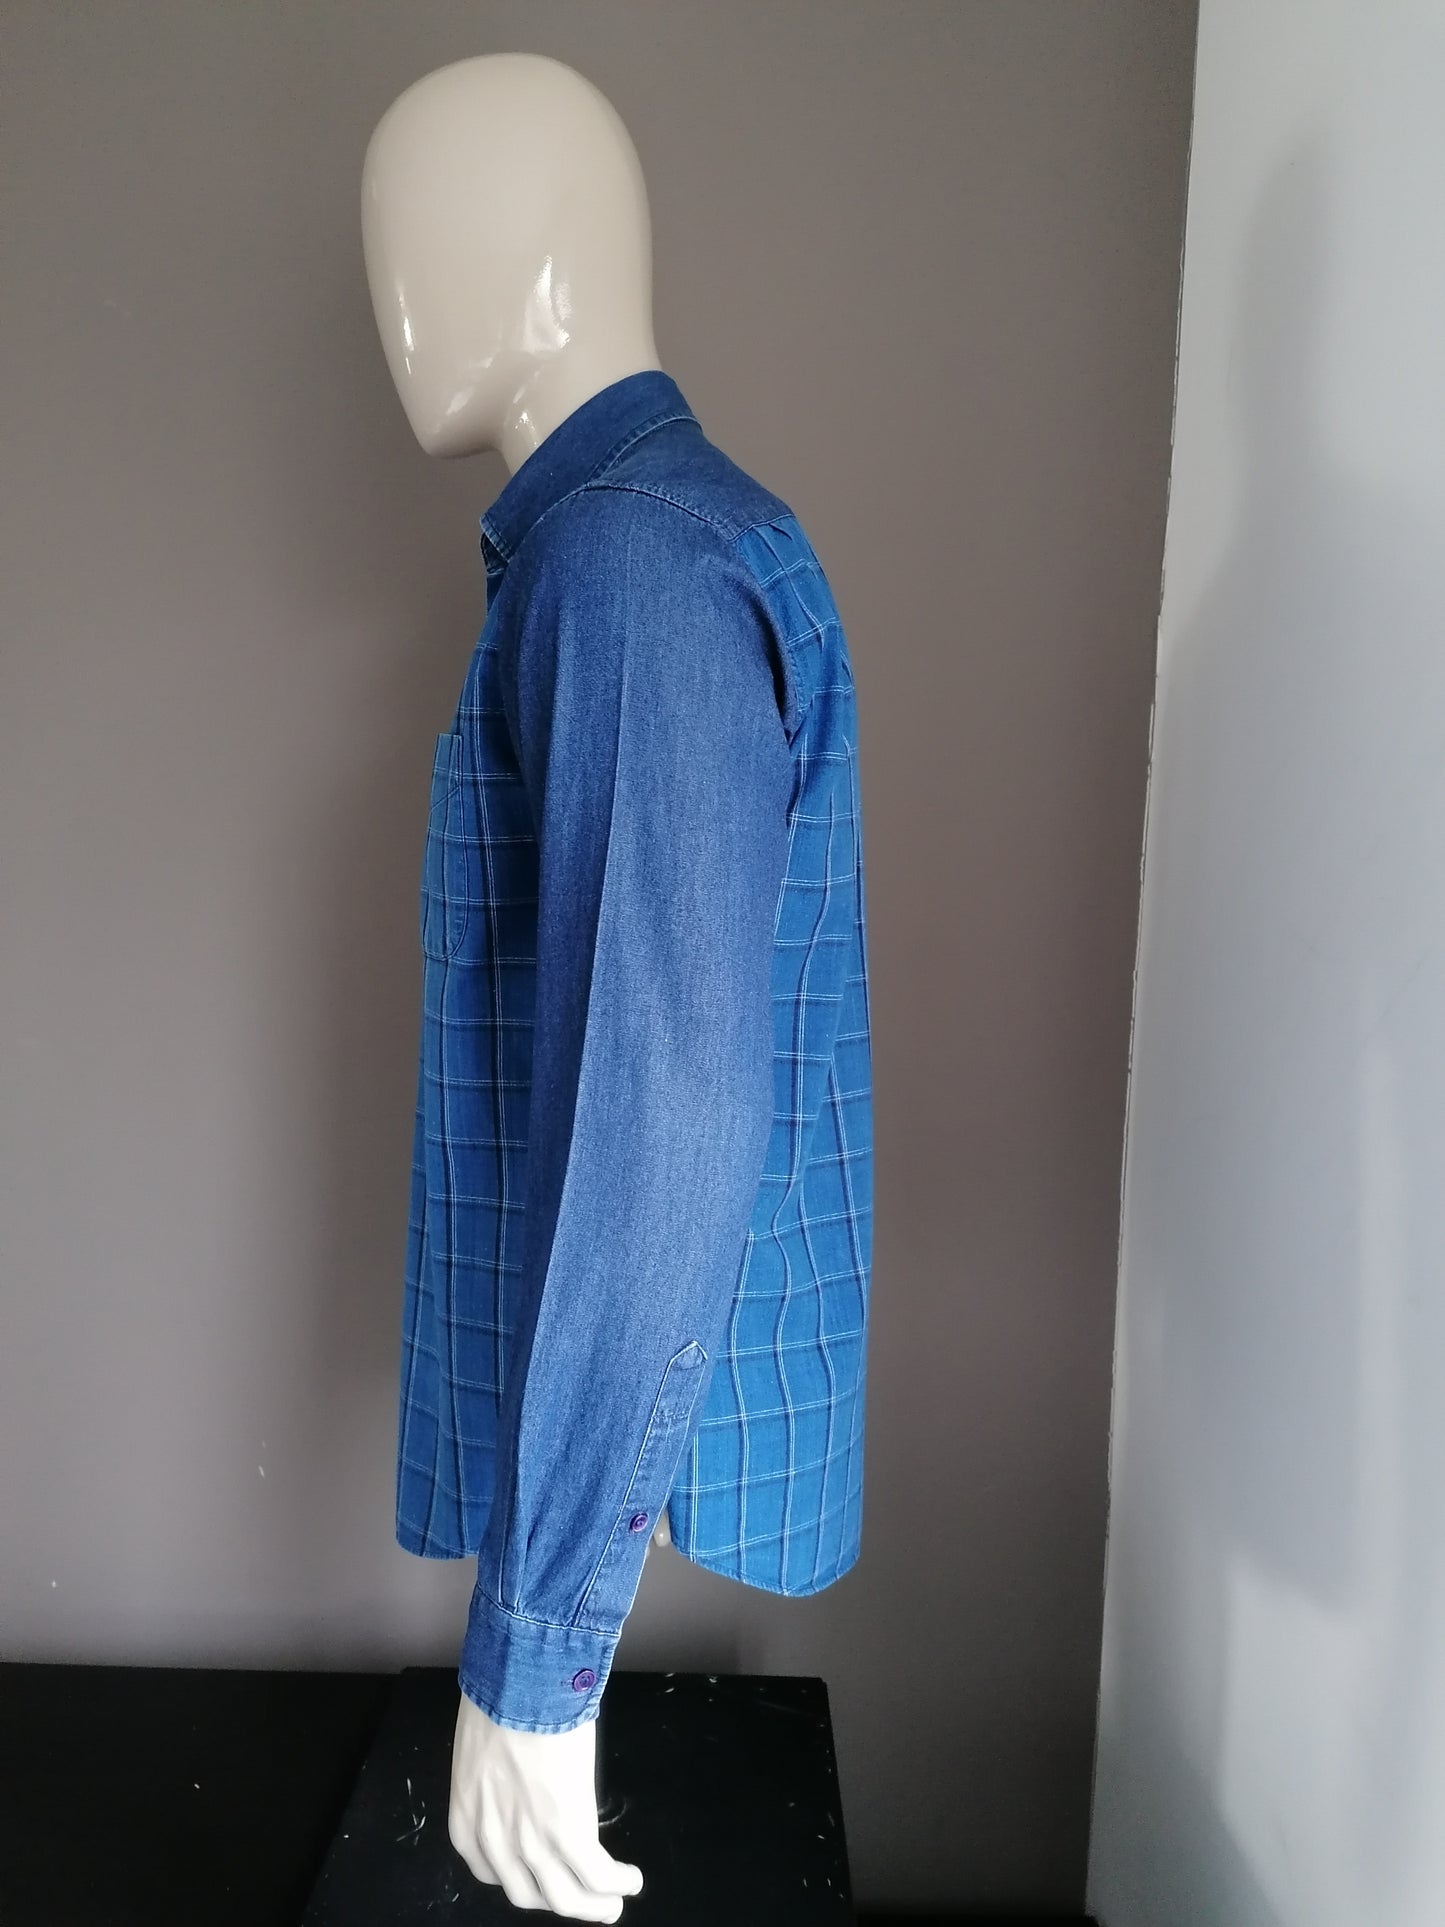 Galleries Lafayette Shirt. Blue checkered motif. Size M.